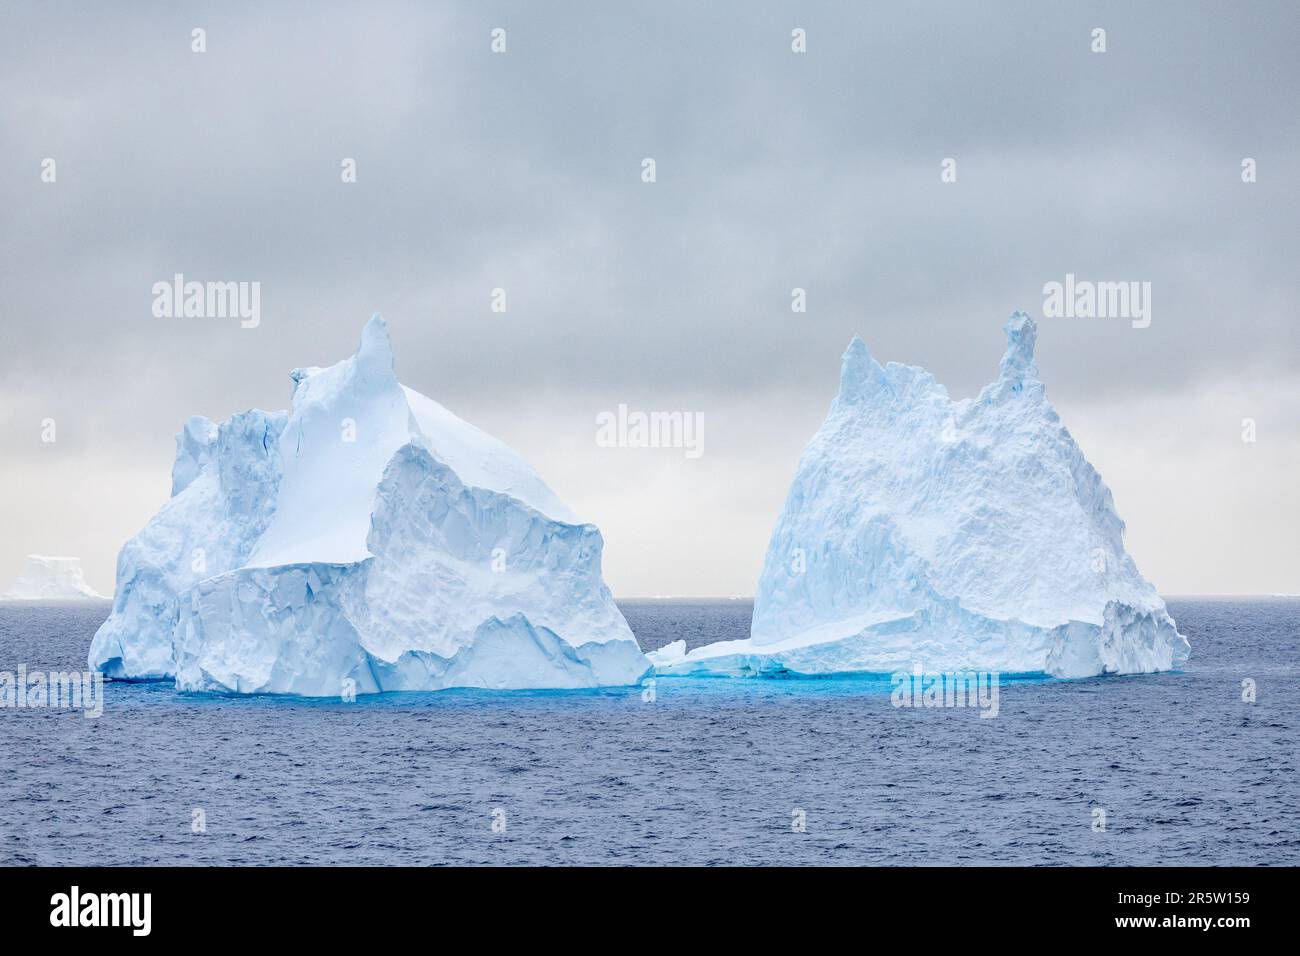 Icebergs floating in the Amundsen Sea Stock Photo